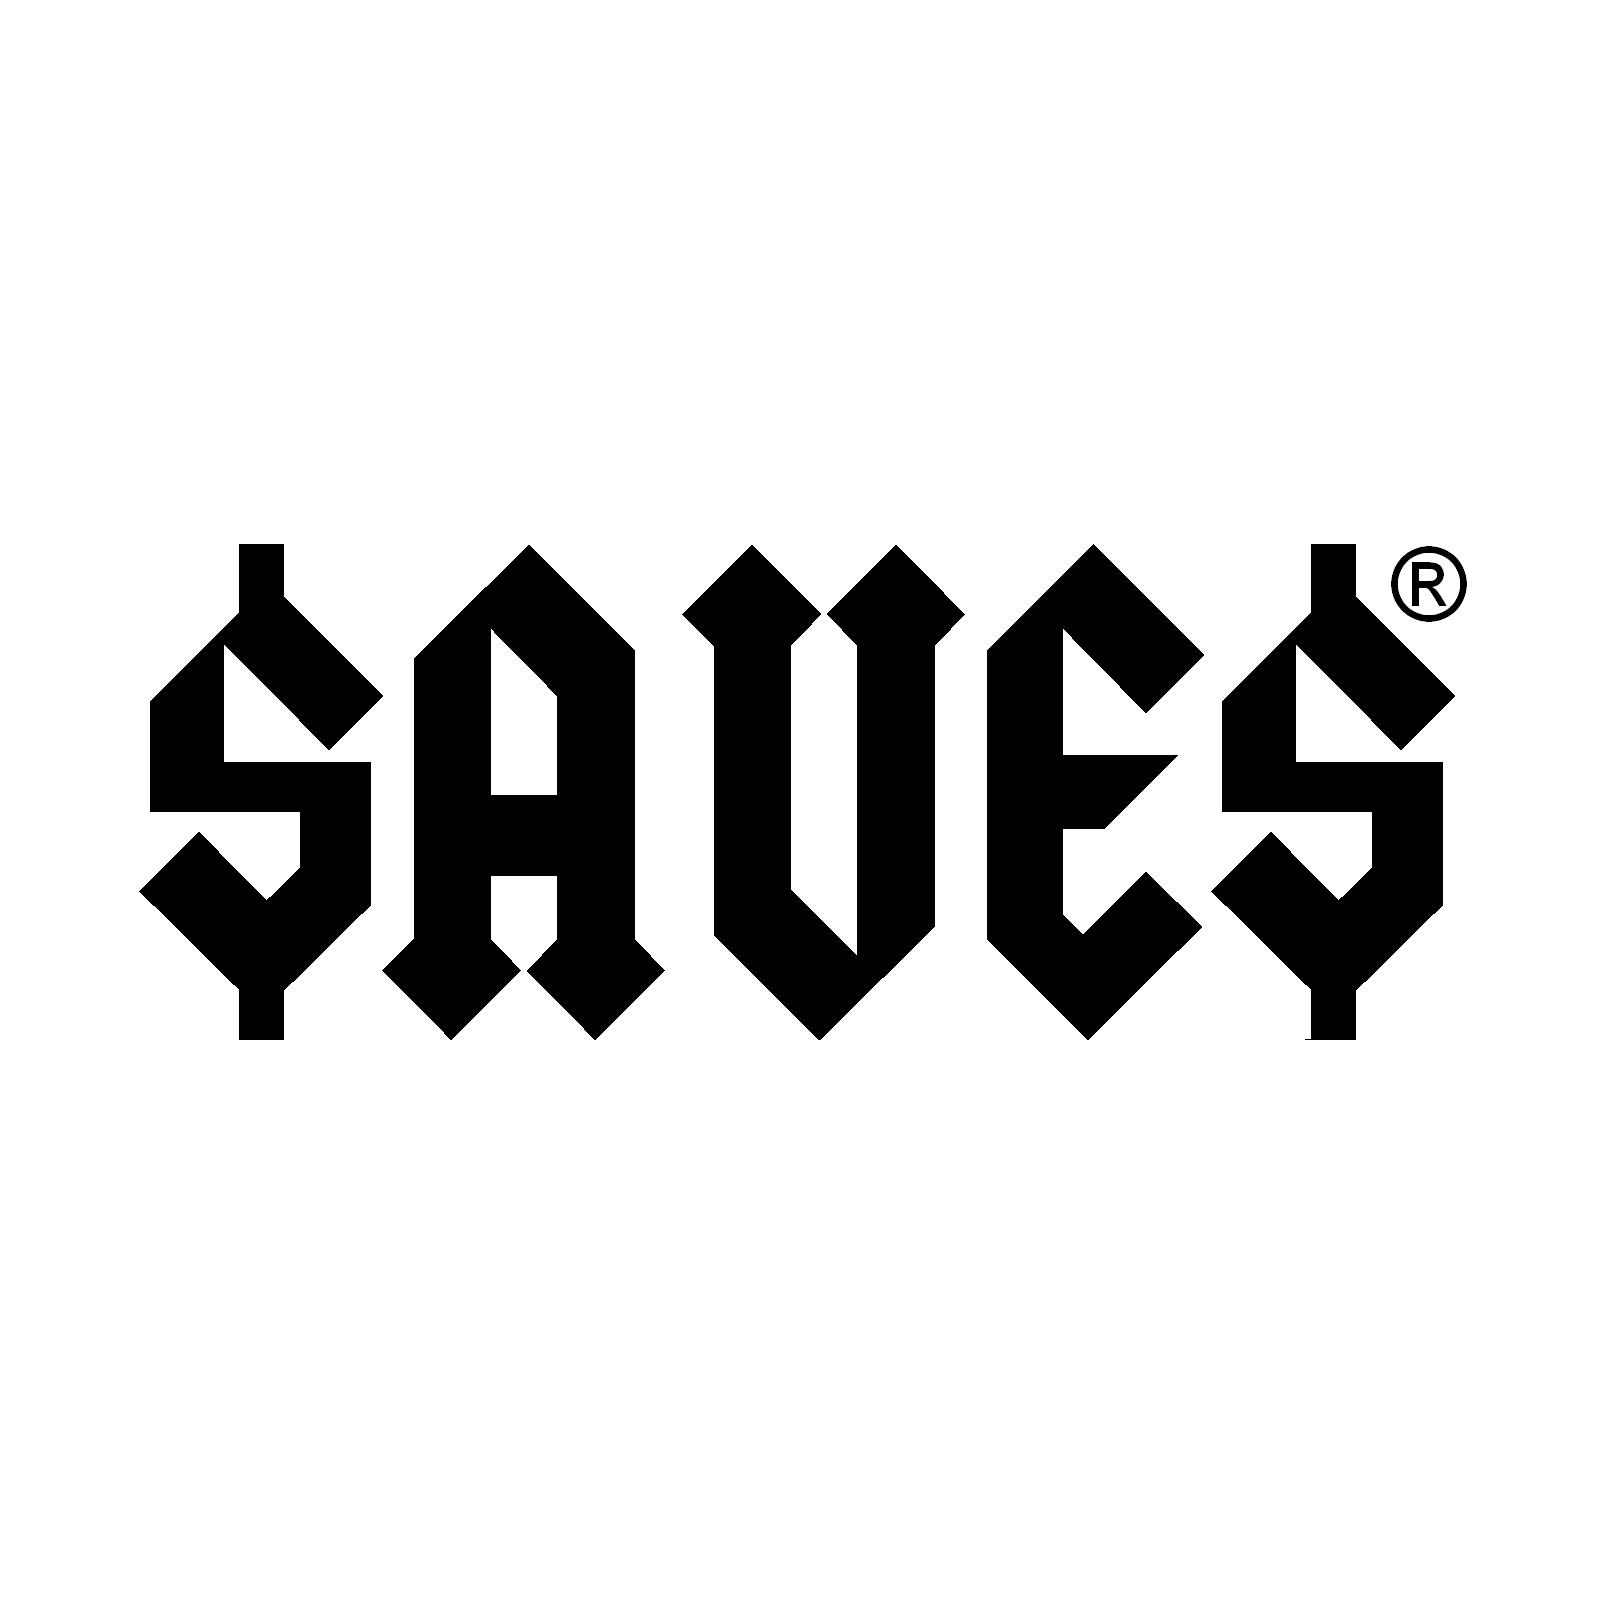 SAVES